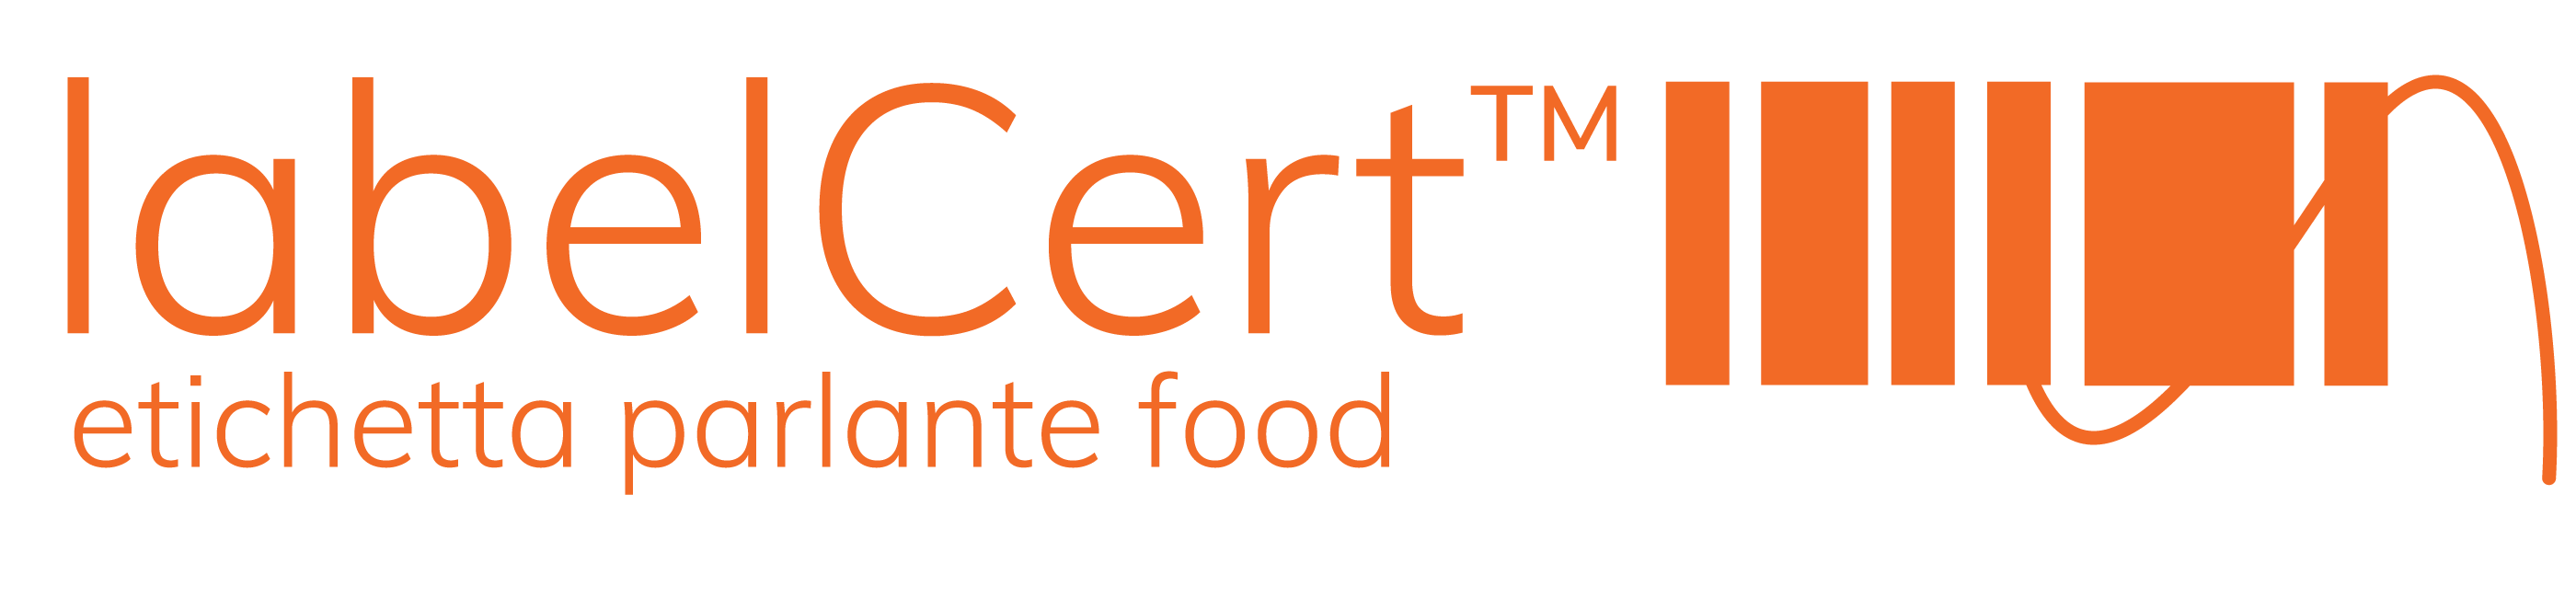 labelCert Food | Etichetta Parlante Agroalimentare